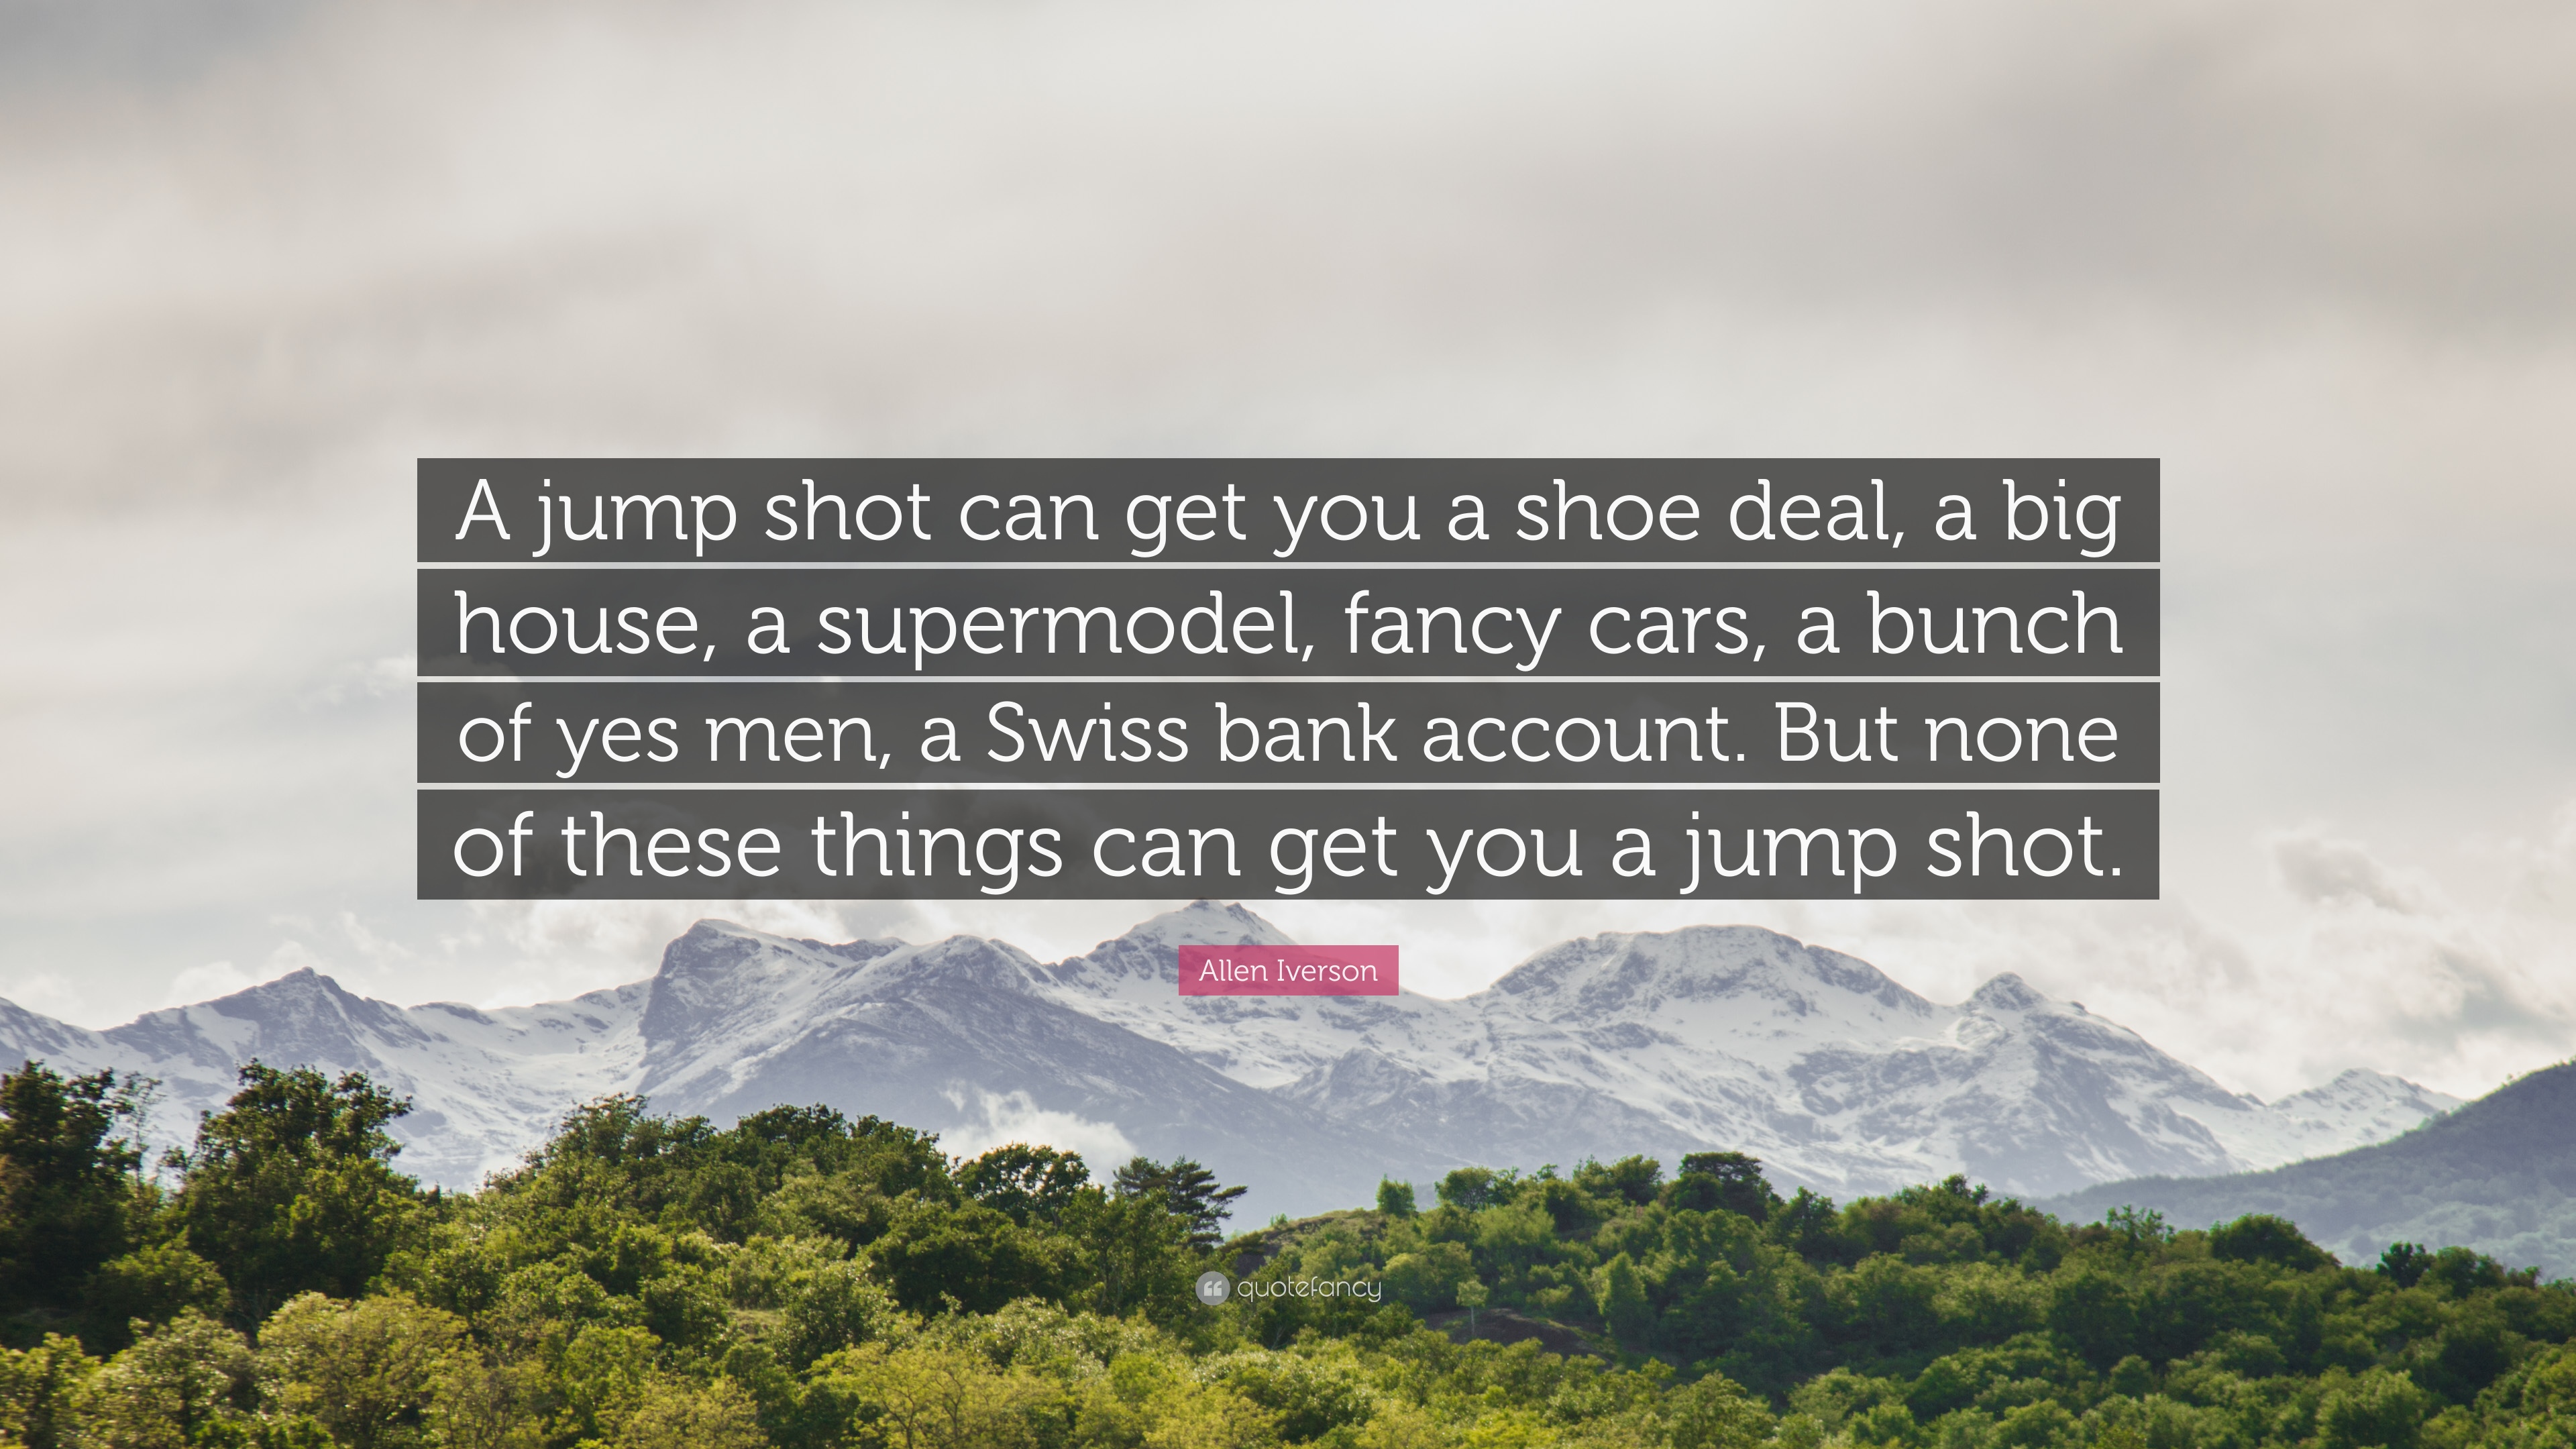 Allen Iverson Quote: “A jump shot can get you a shoe deal, a big